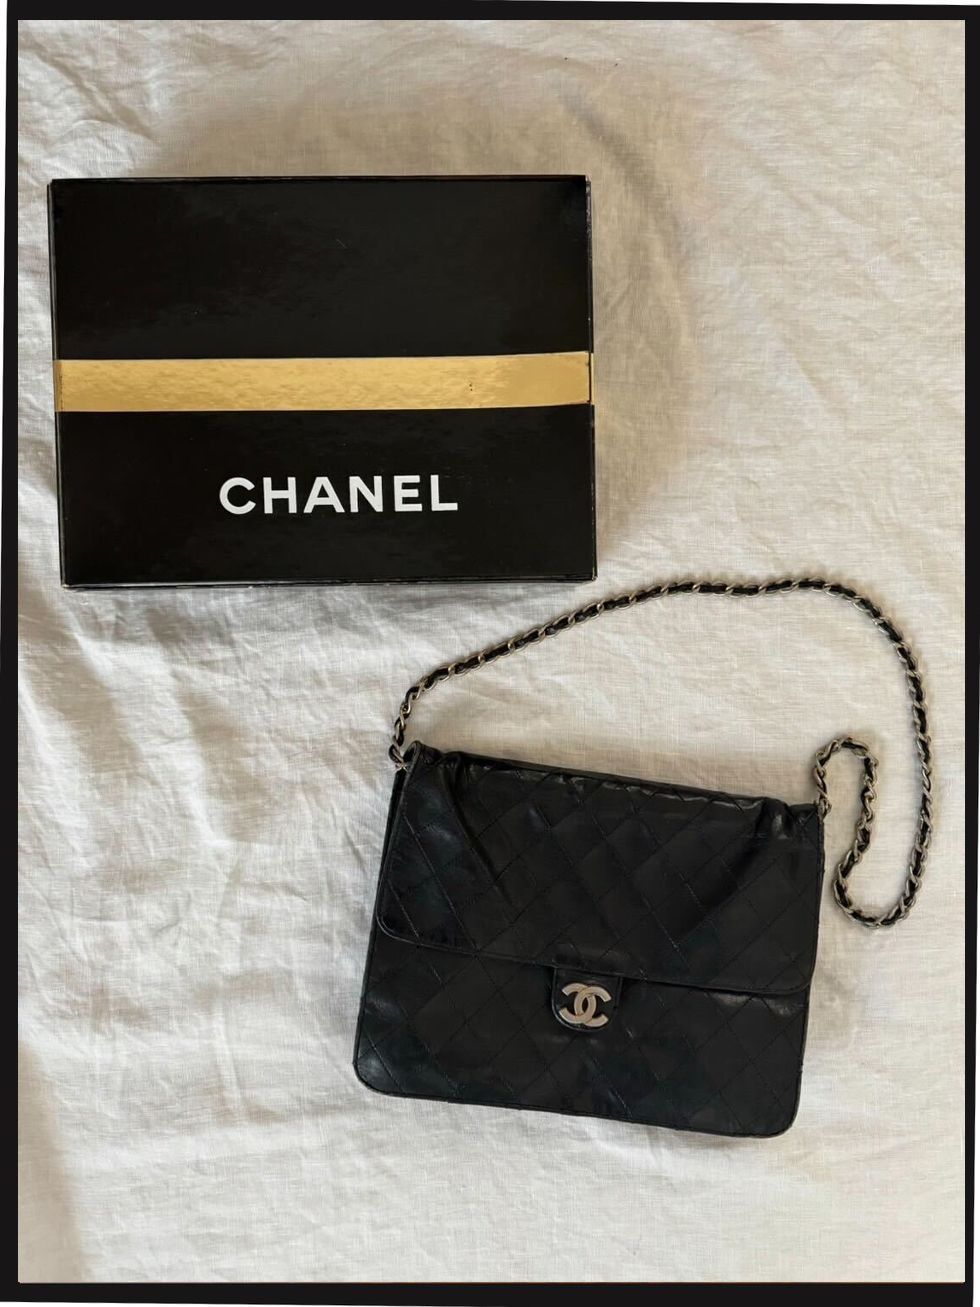 a black bag and a black purse